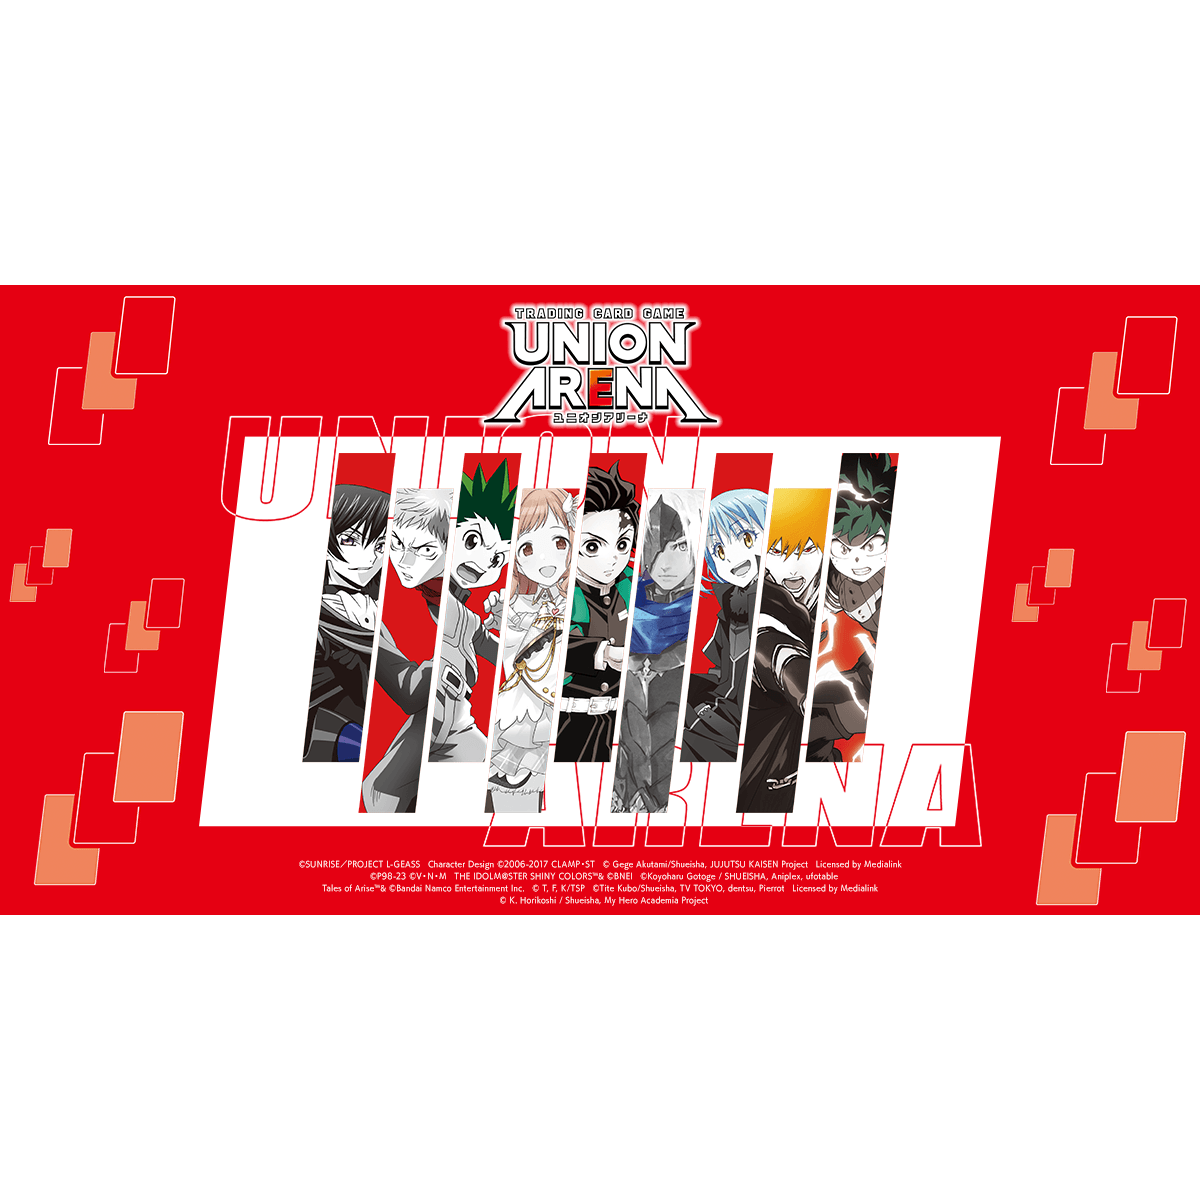 Union Arena Official Sleeve "Tekken 7"-Bandai Namco-Ace Cards & Collectibles